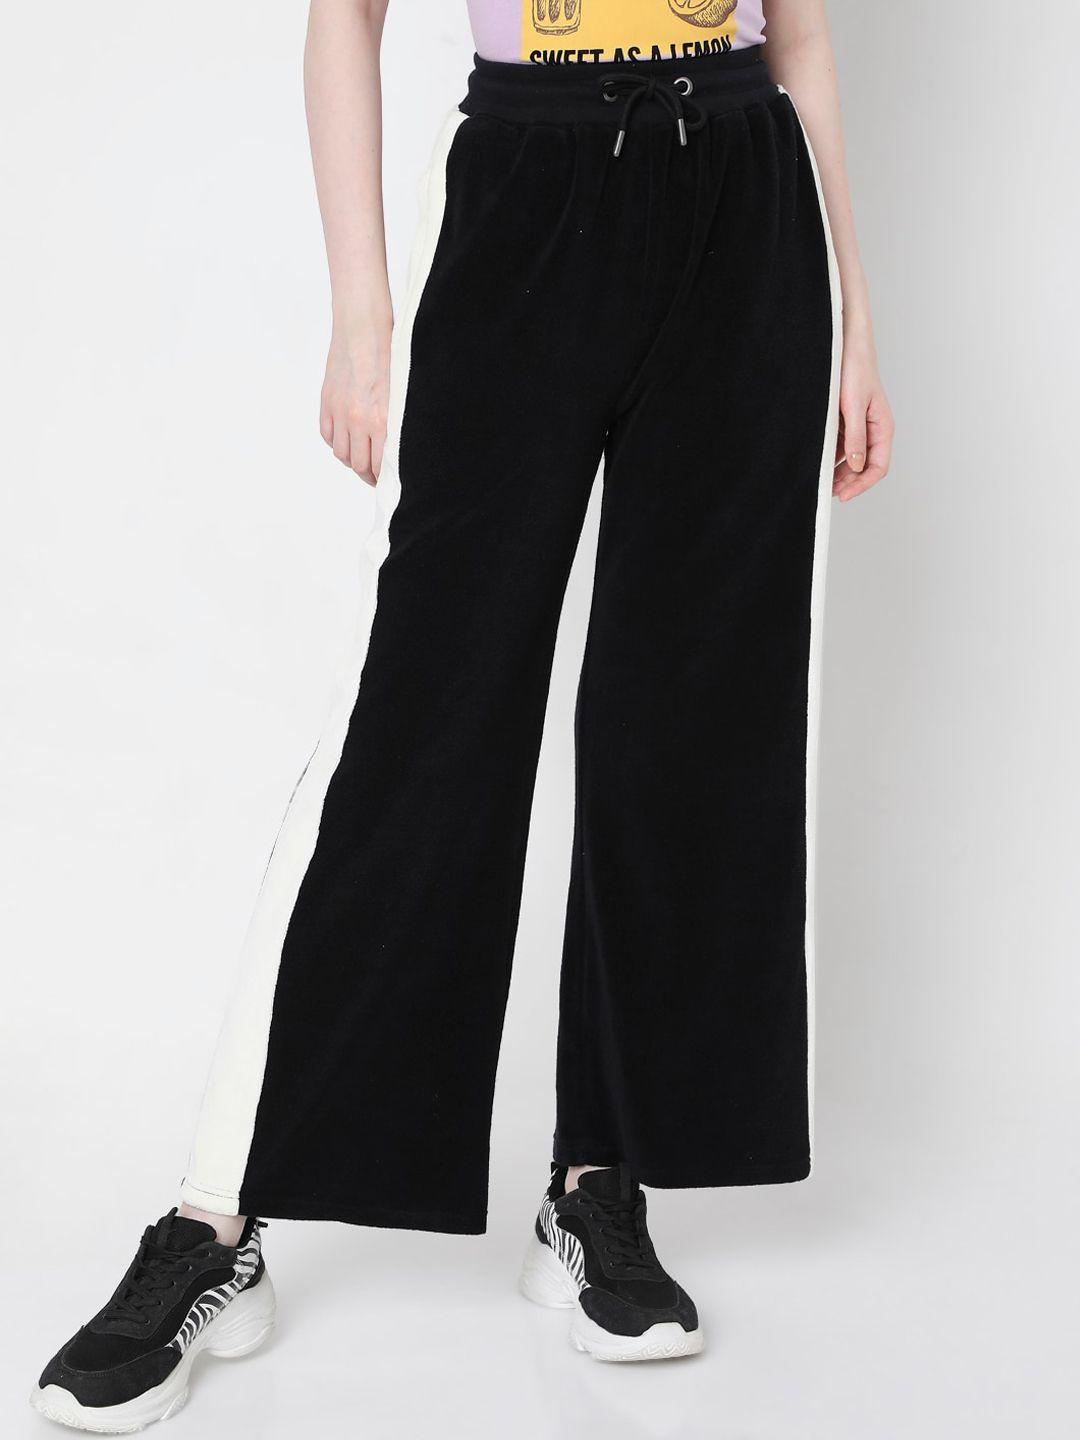 vero moda women black & white cotton track pants